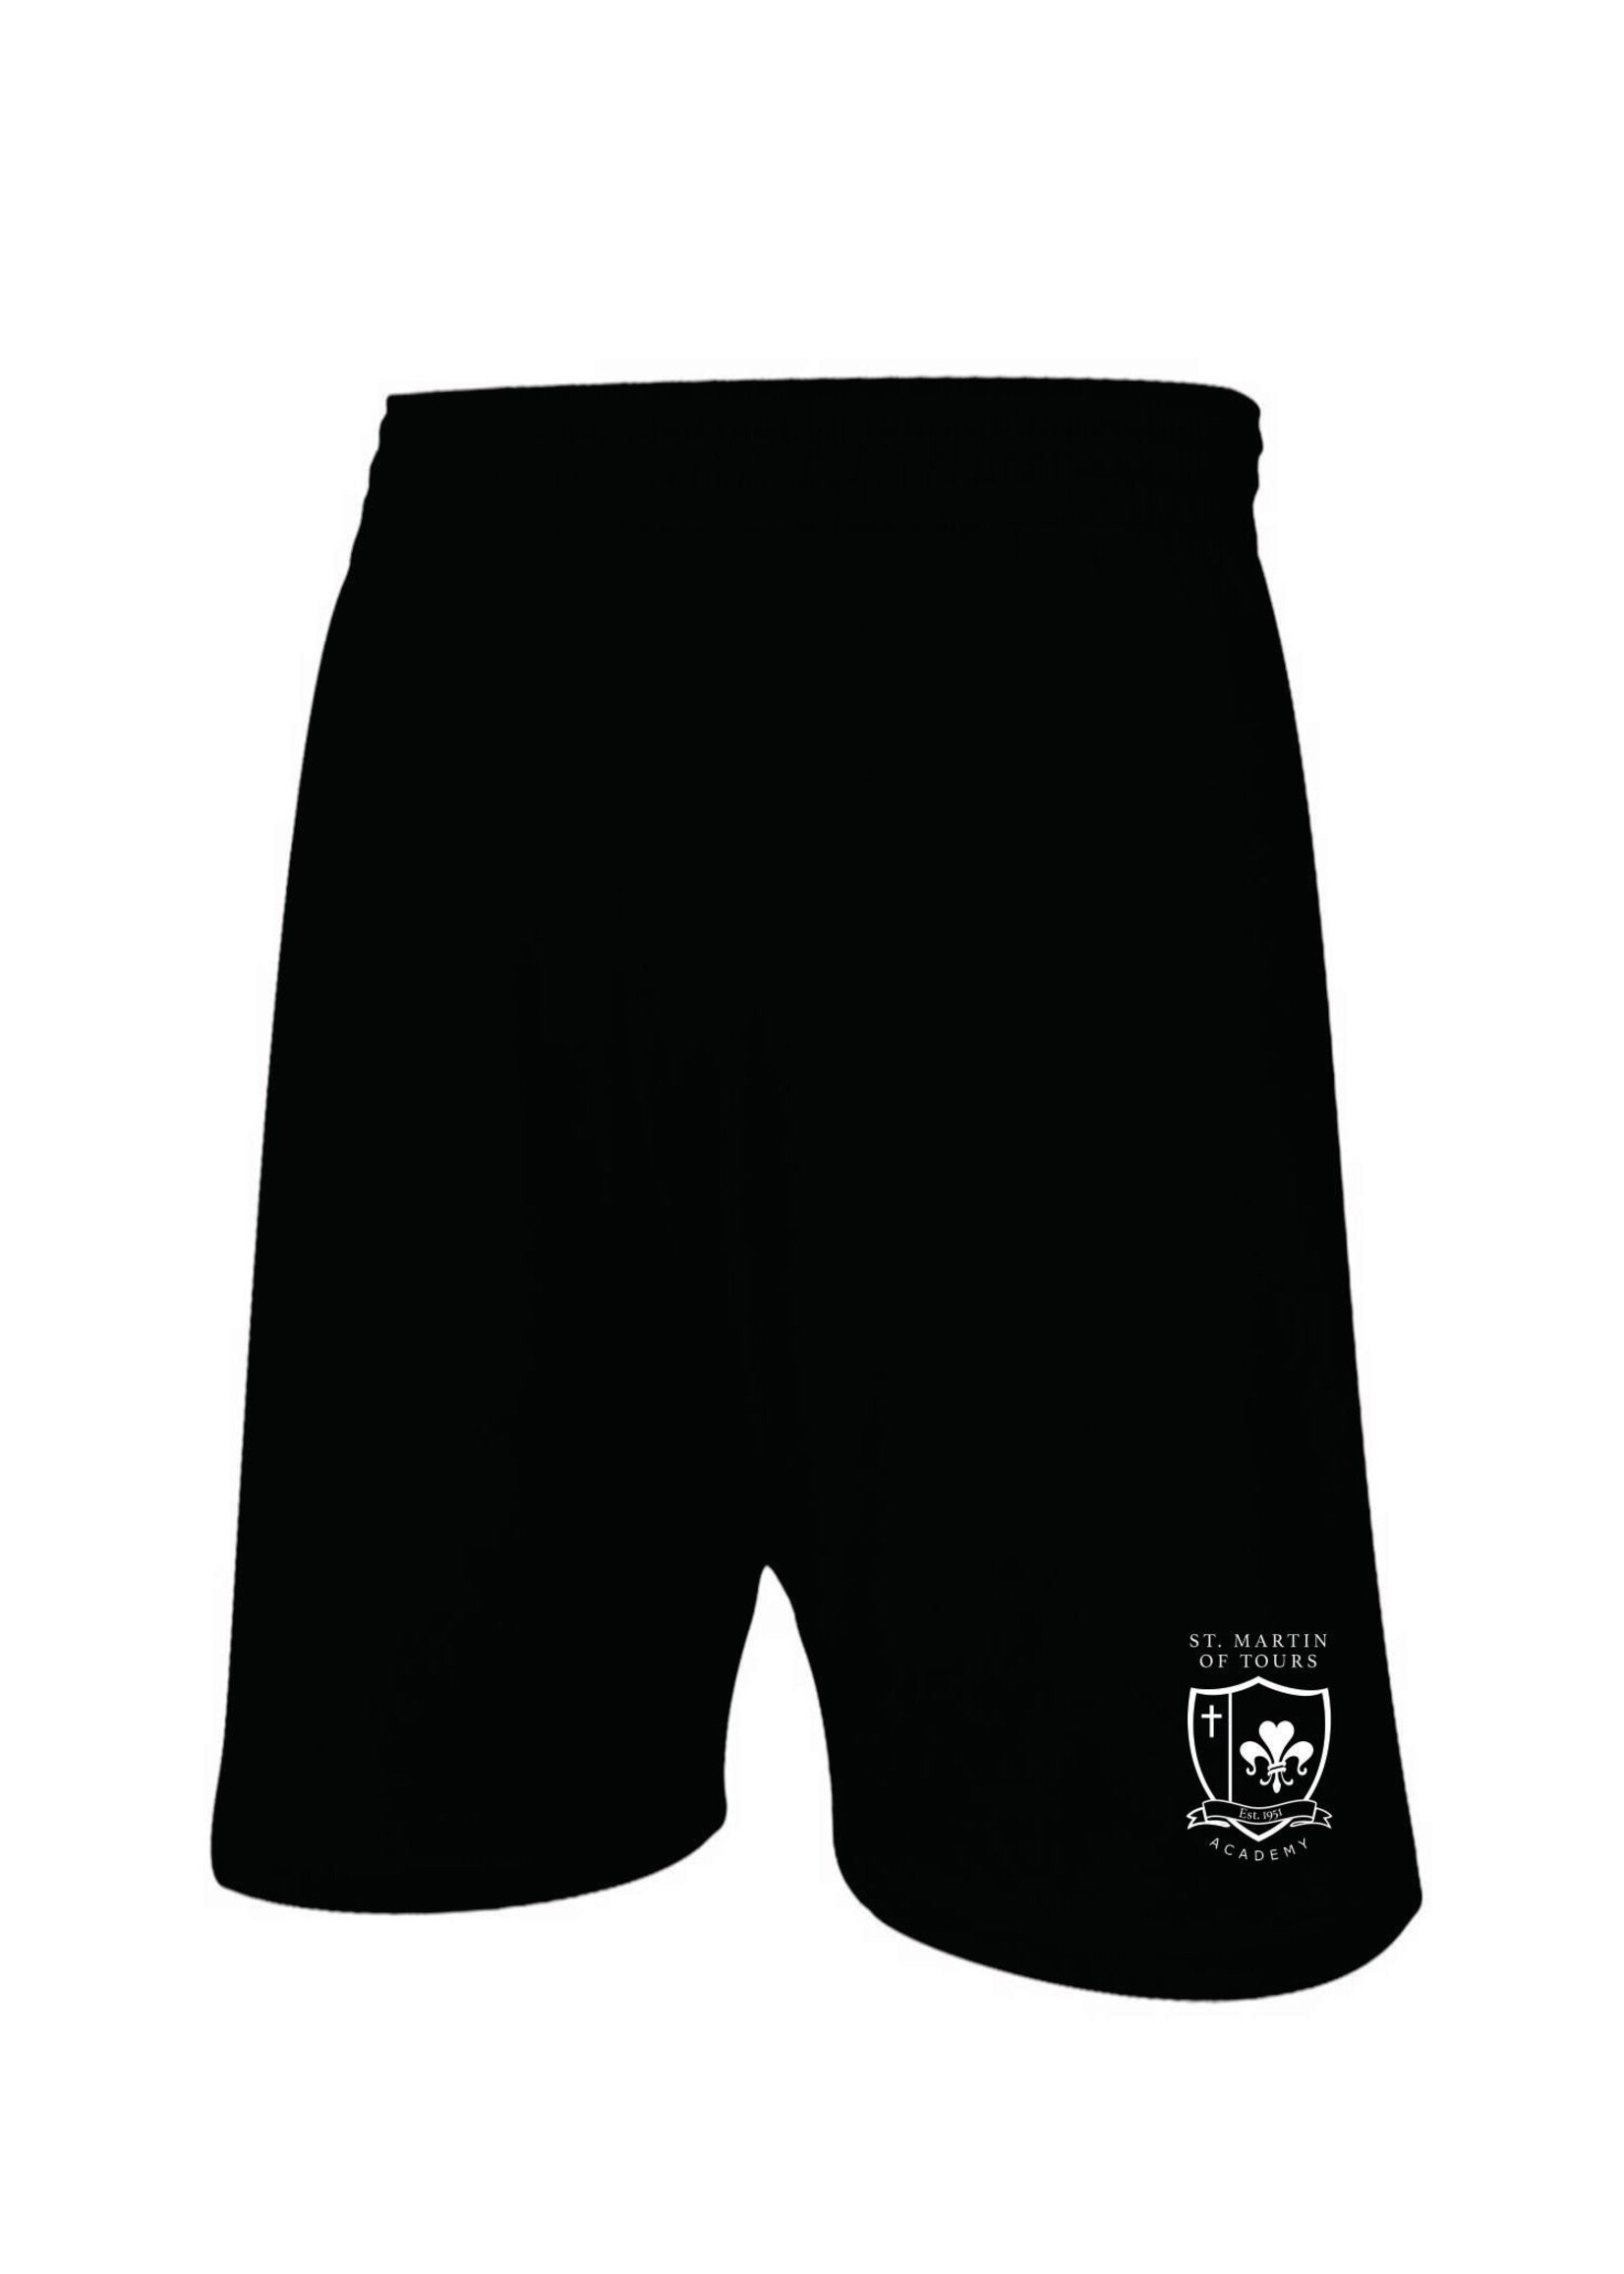 SMTA Black Dry Fit Shorts